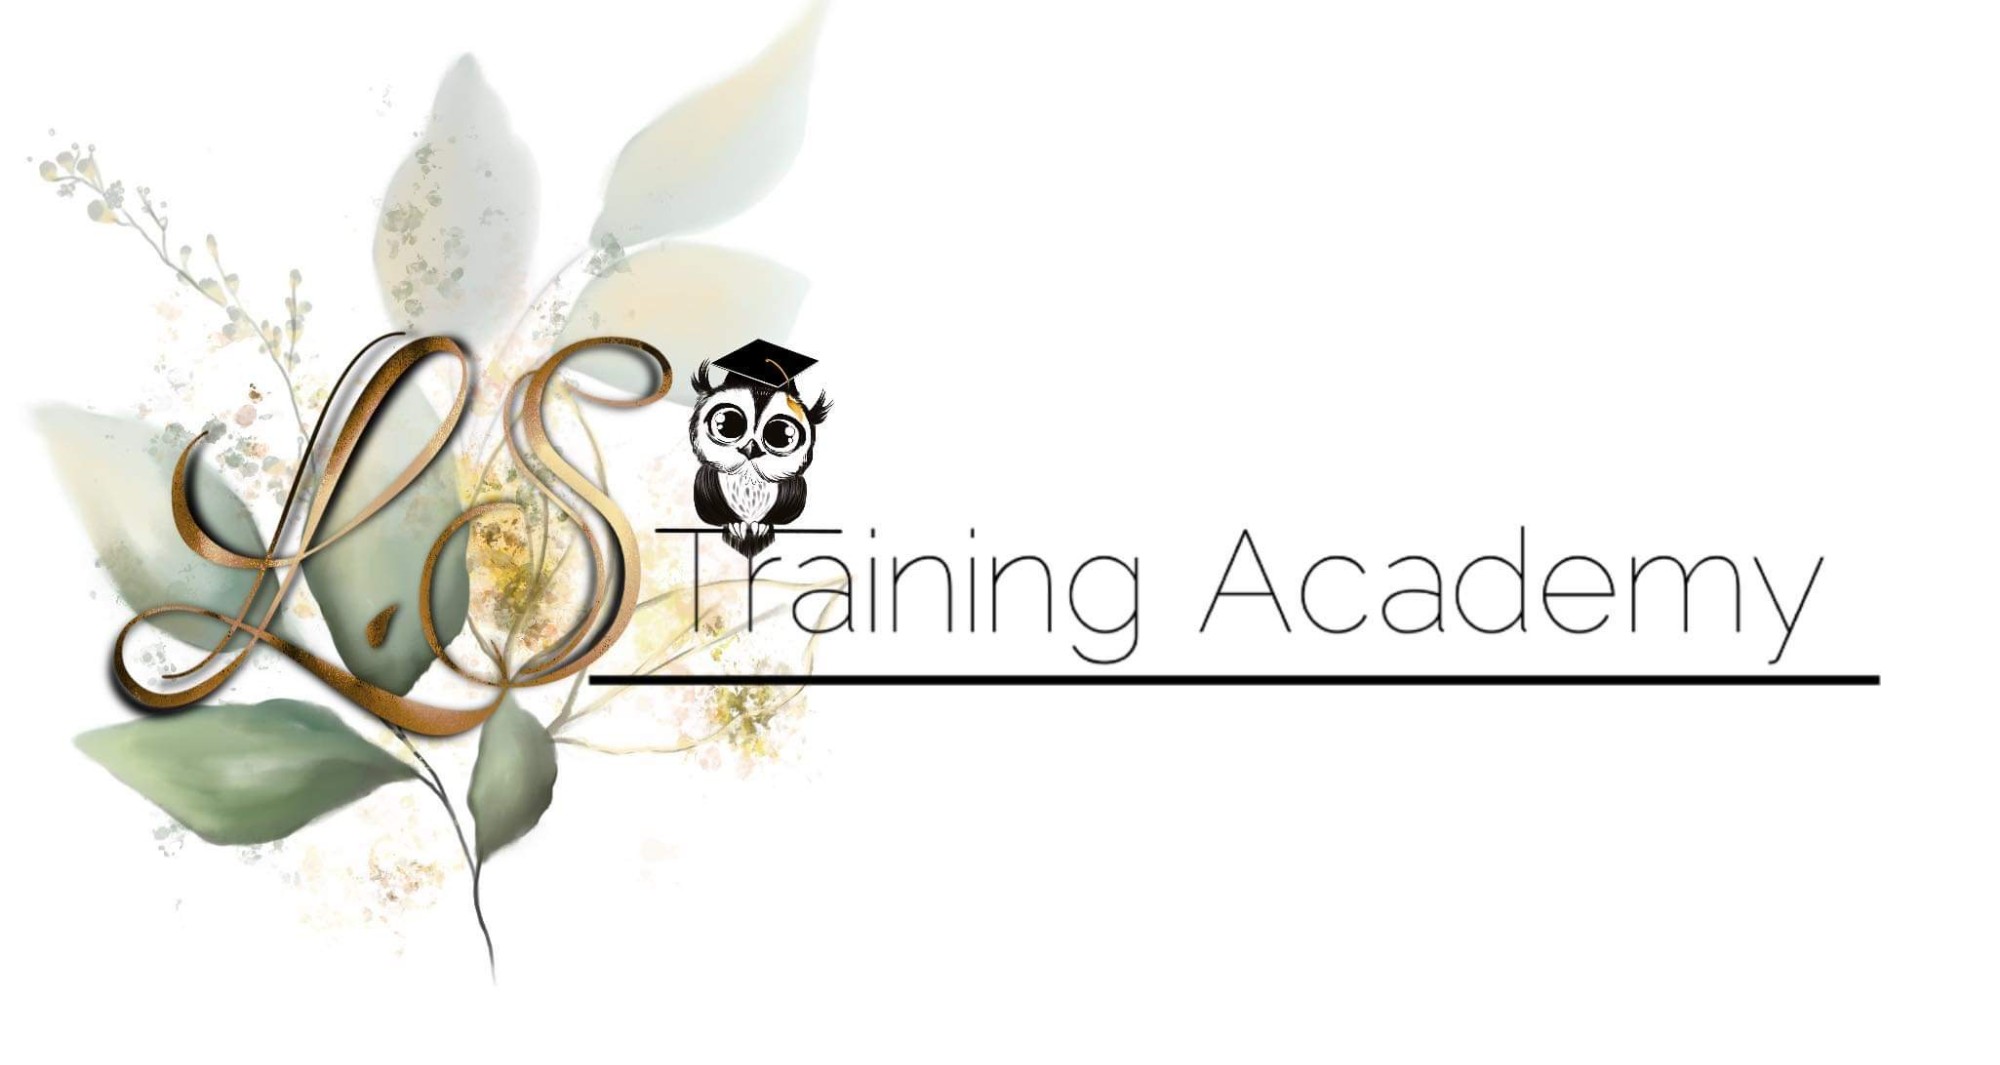 L.S.Training Academy logo